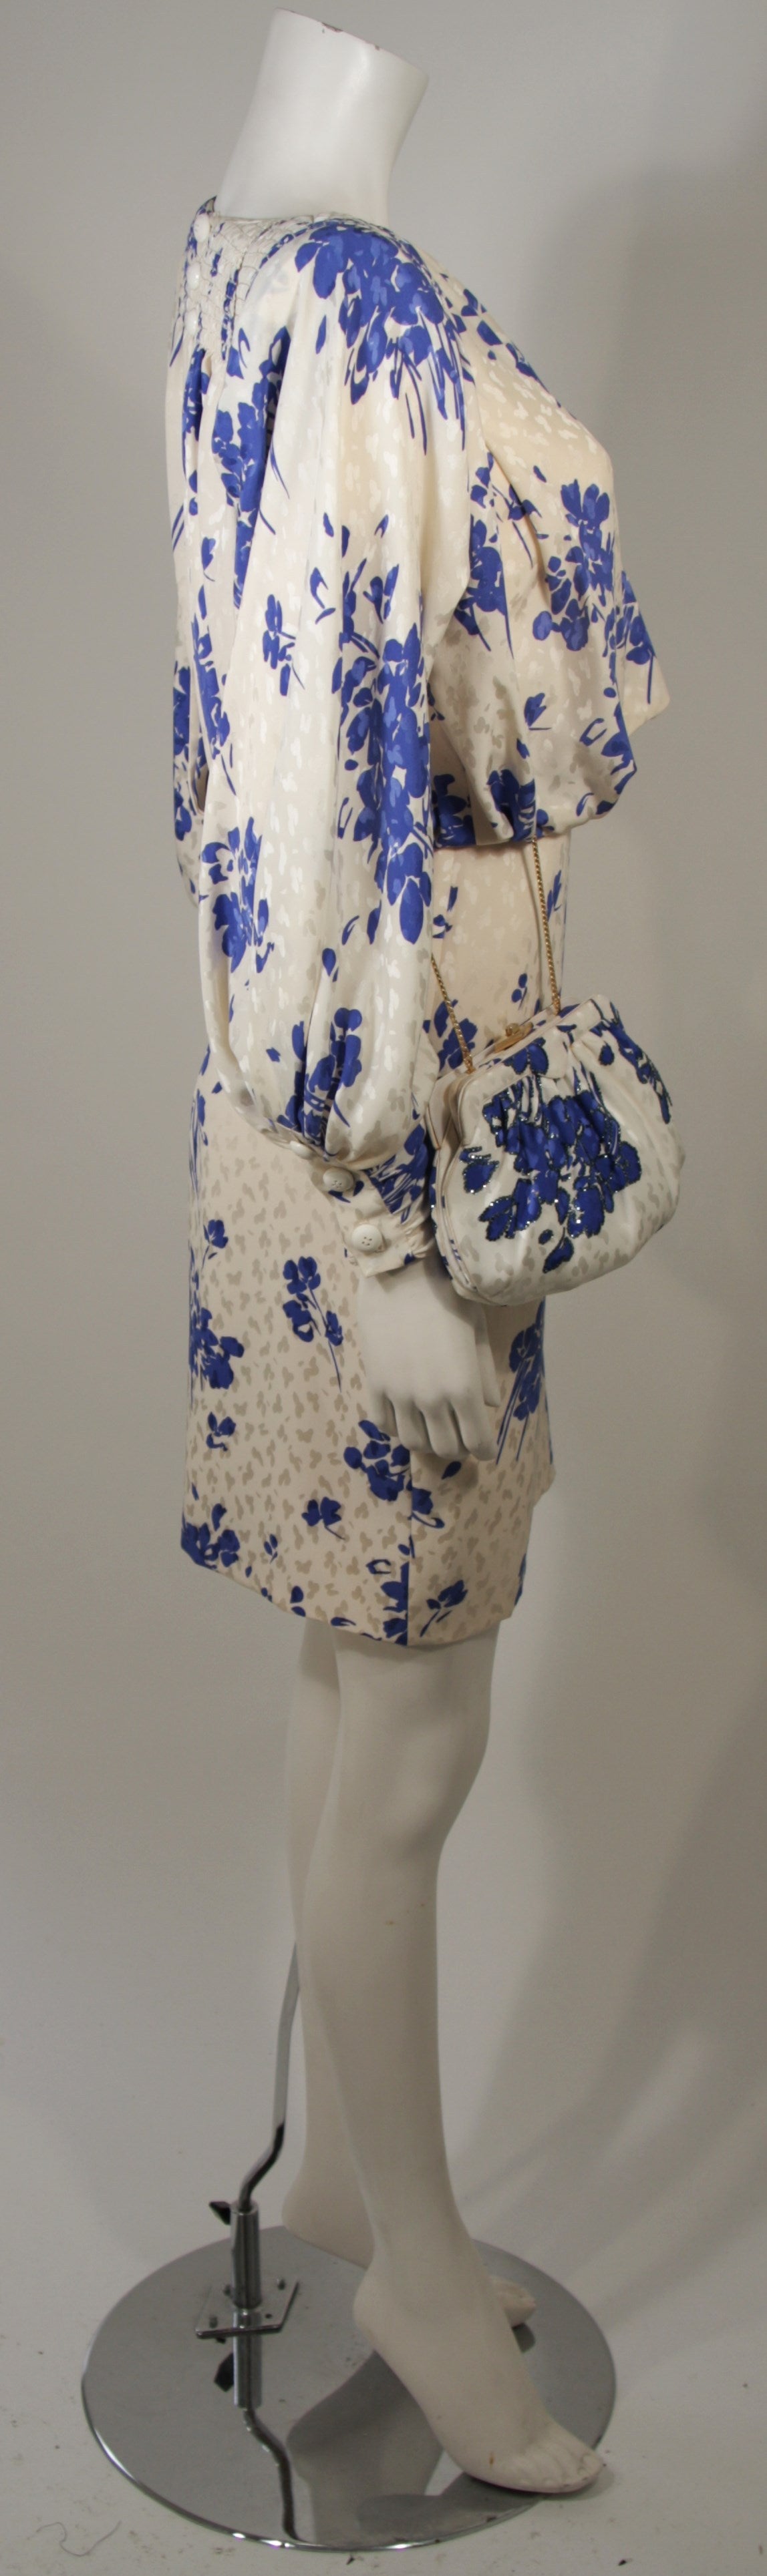 Galanos Silk Dress with Matching Embellished Judith Leiber Purse Size 2-4 2